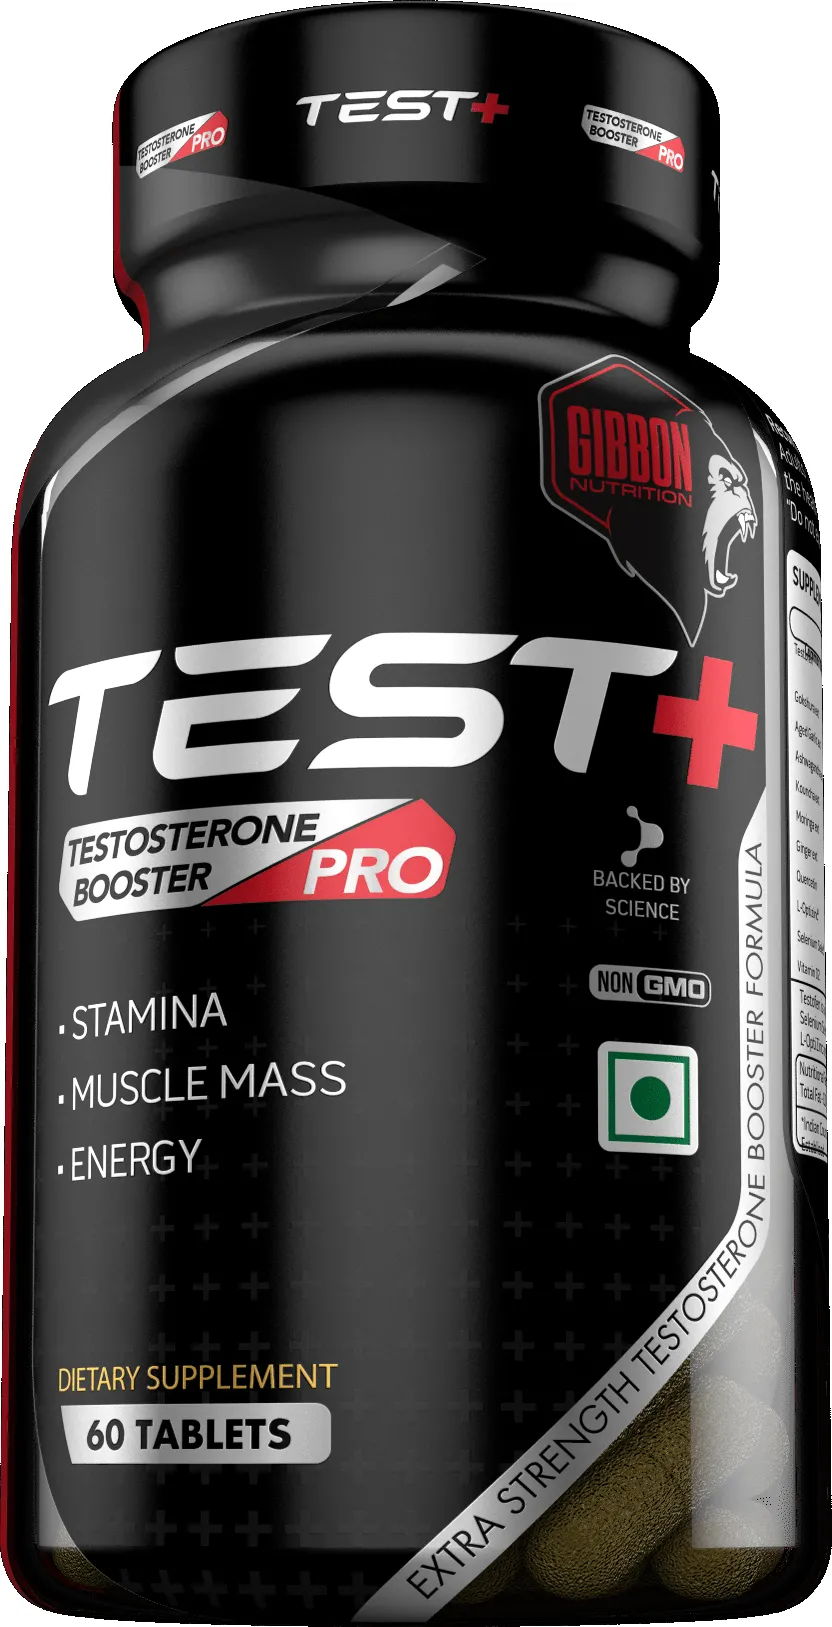 Gibbon Test + | Testosterone Booster, 60 Tablets